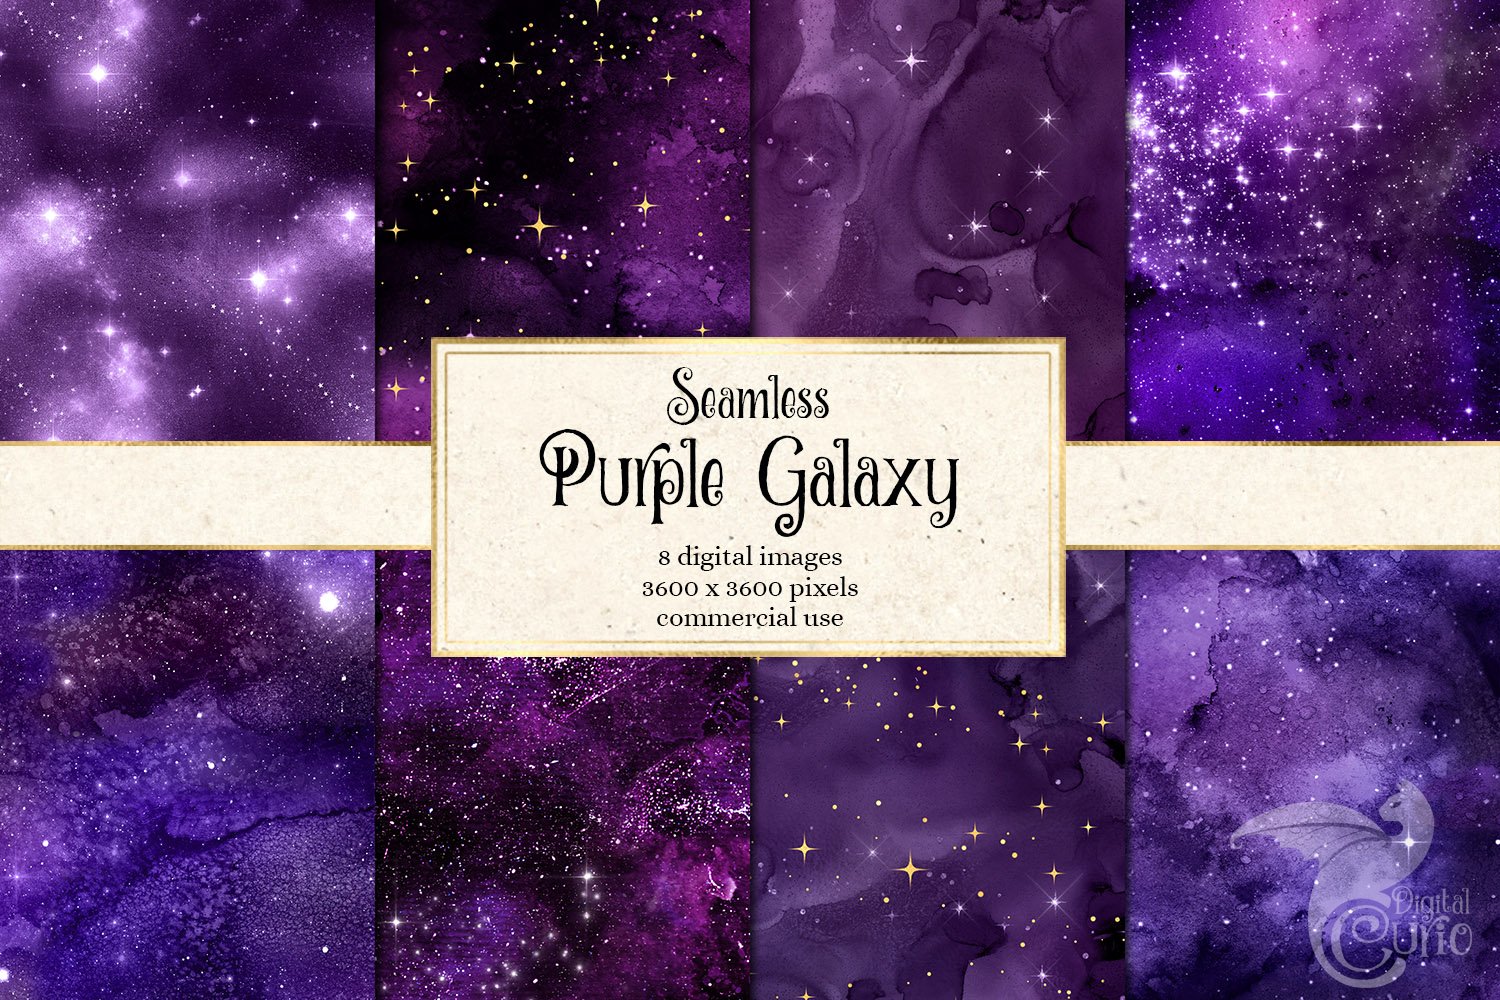 Purple Galaxy Digital Paper cover image.